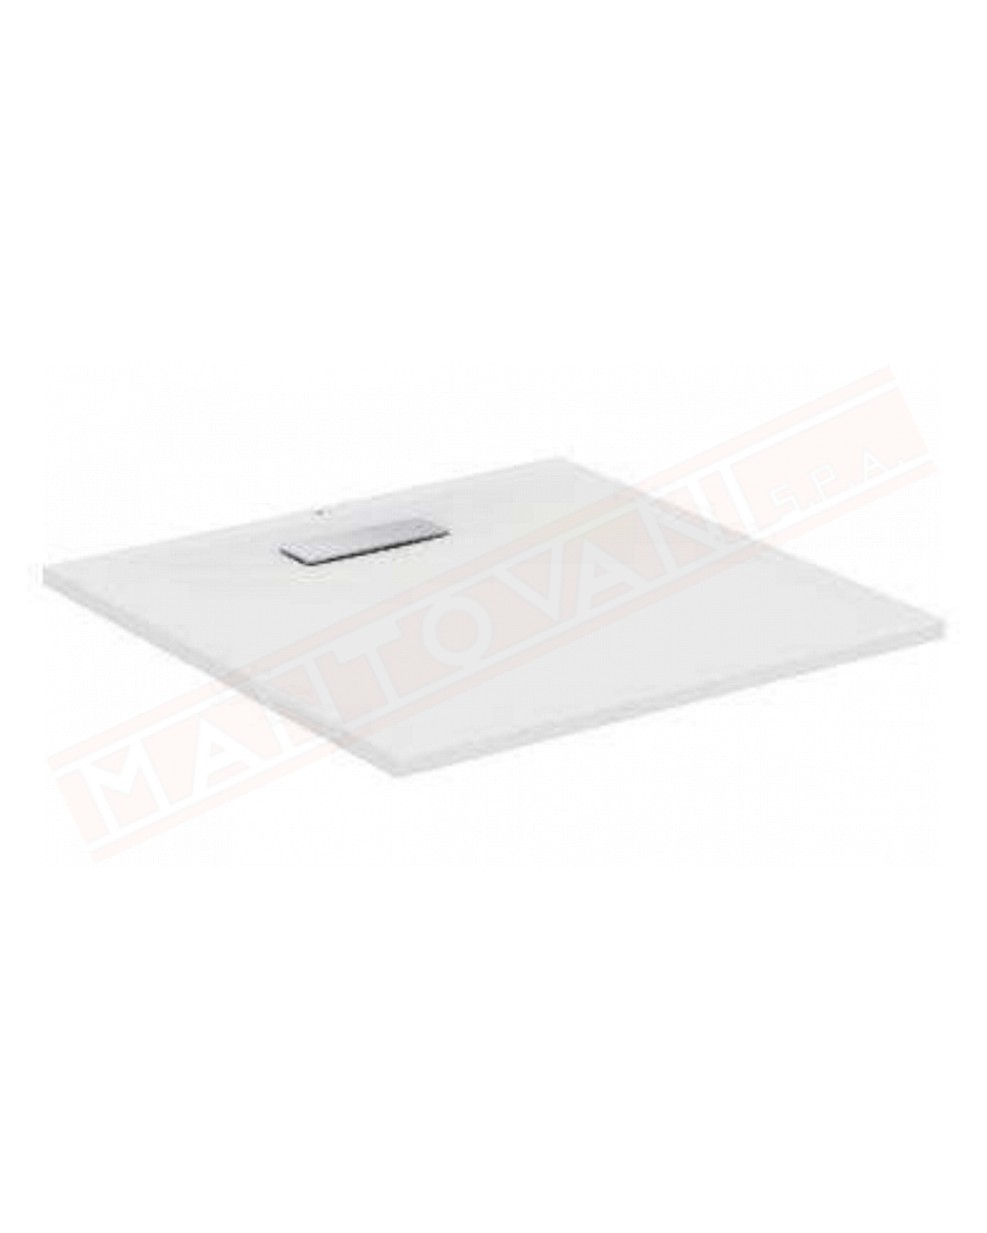 Ideal Standard ultraflat new bianco opaco 80x80x2.5 piatto doccia ultrasottile in acrilico in pasta senza piletta t4493aa